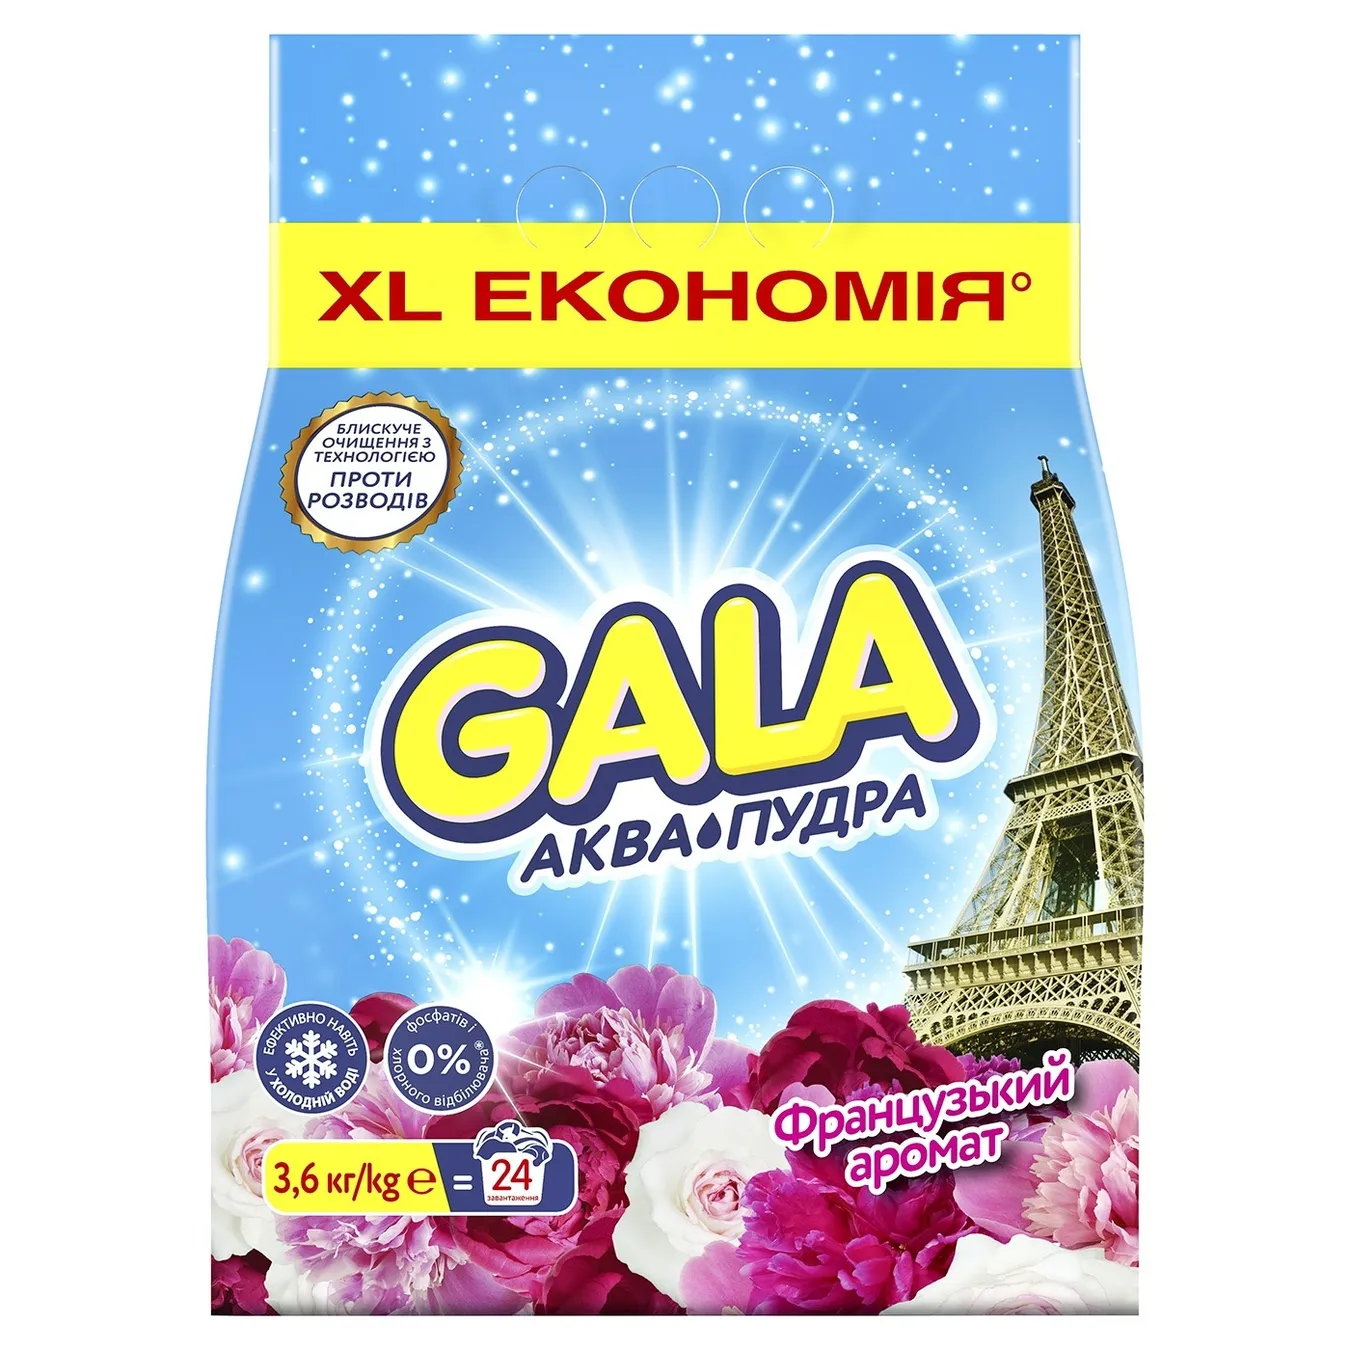 Washing powder Gala machine aqua powder French aroma 3.6 kg